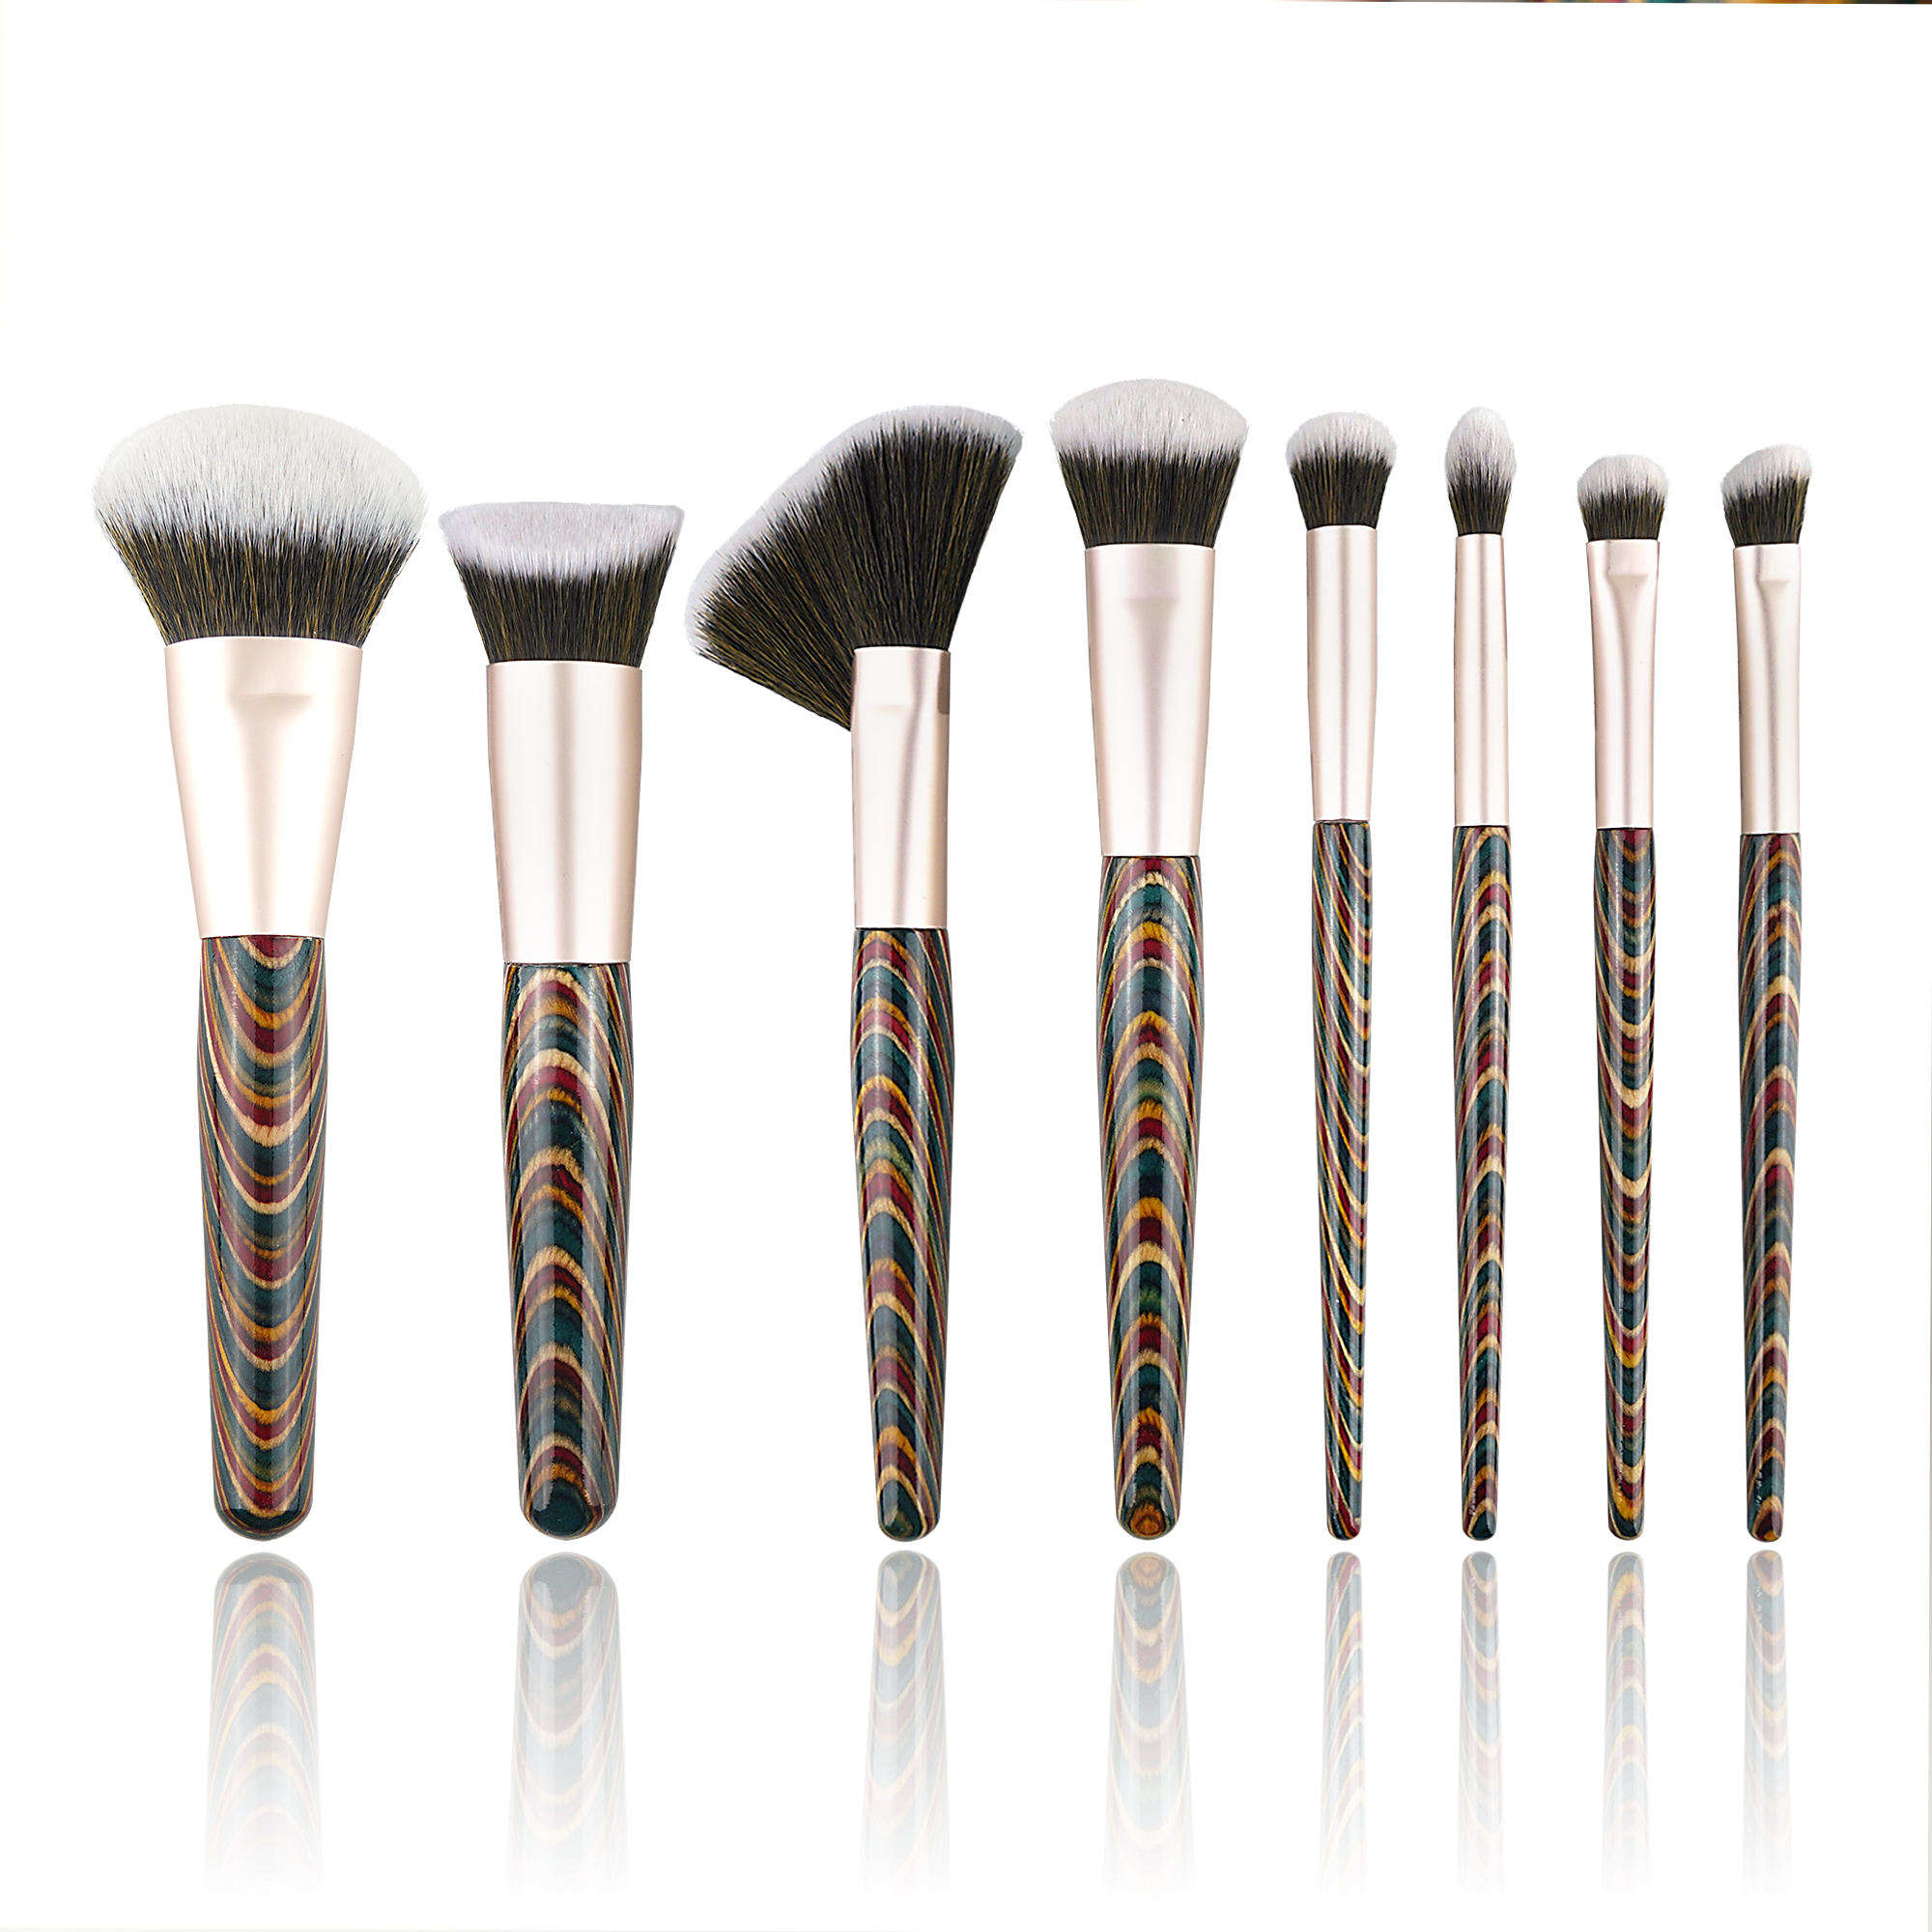 8 pcs wooden handle beauty black makeup brush set